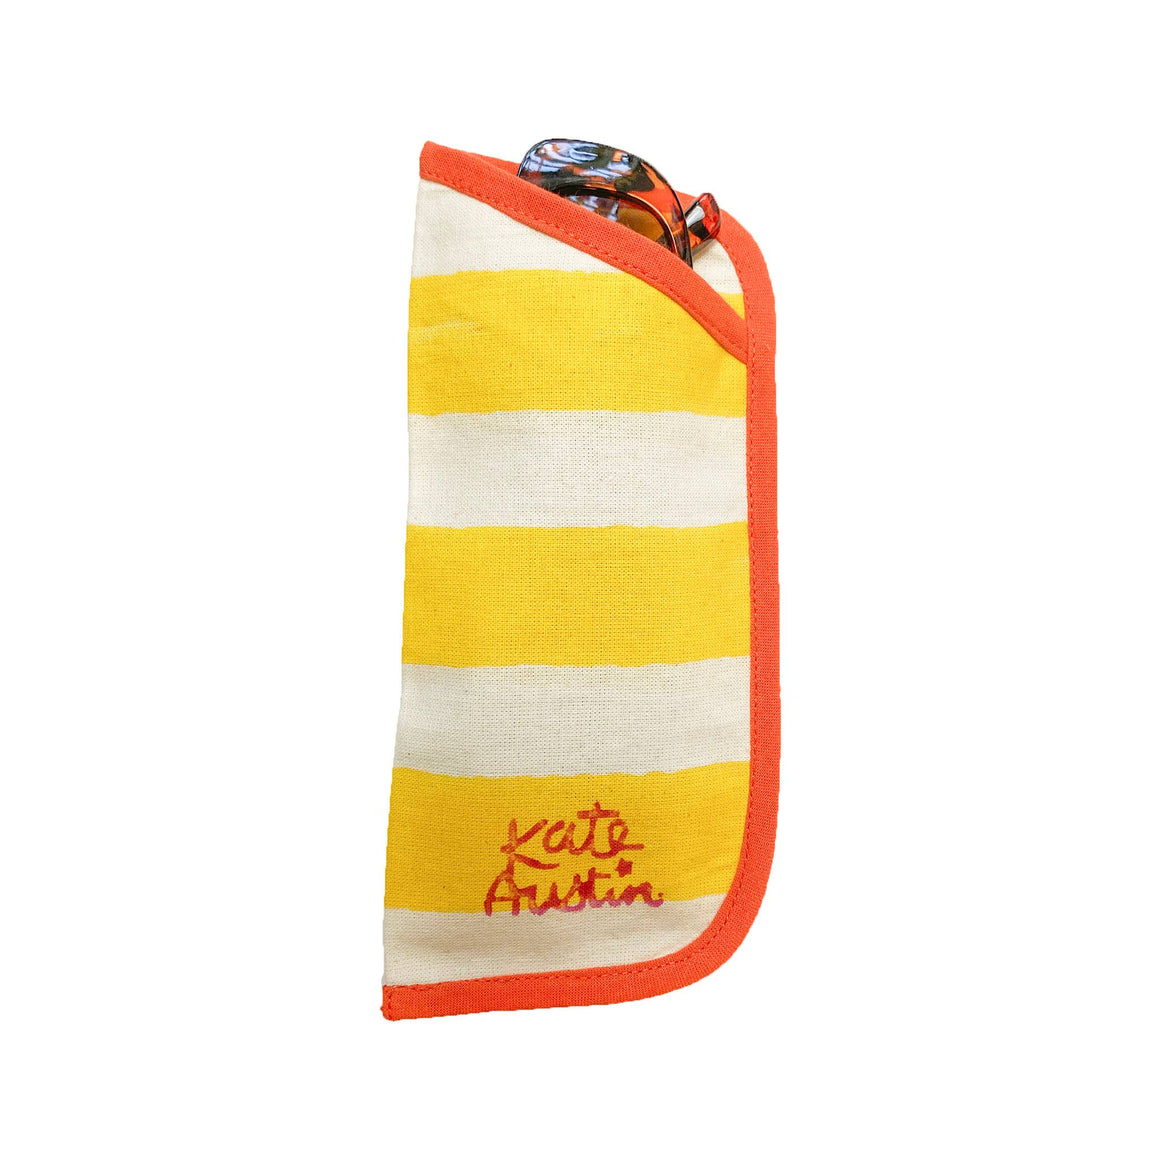 Sunglass Cover in Yellow Wide Stripe with Orange